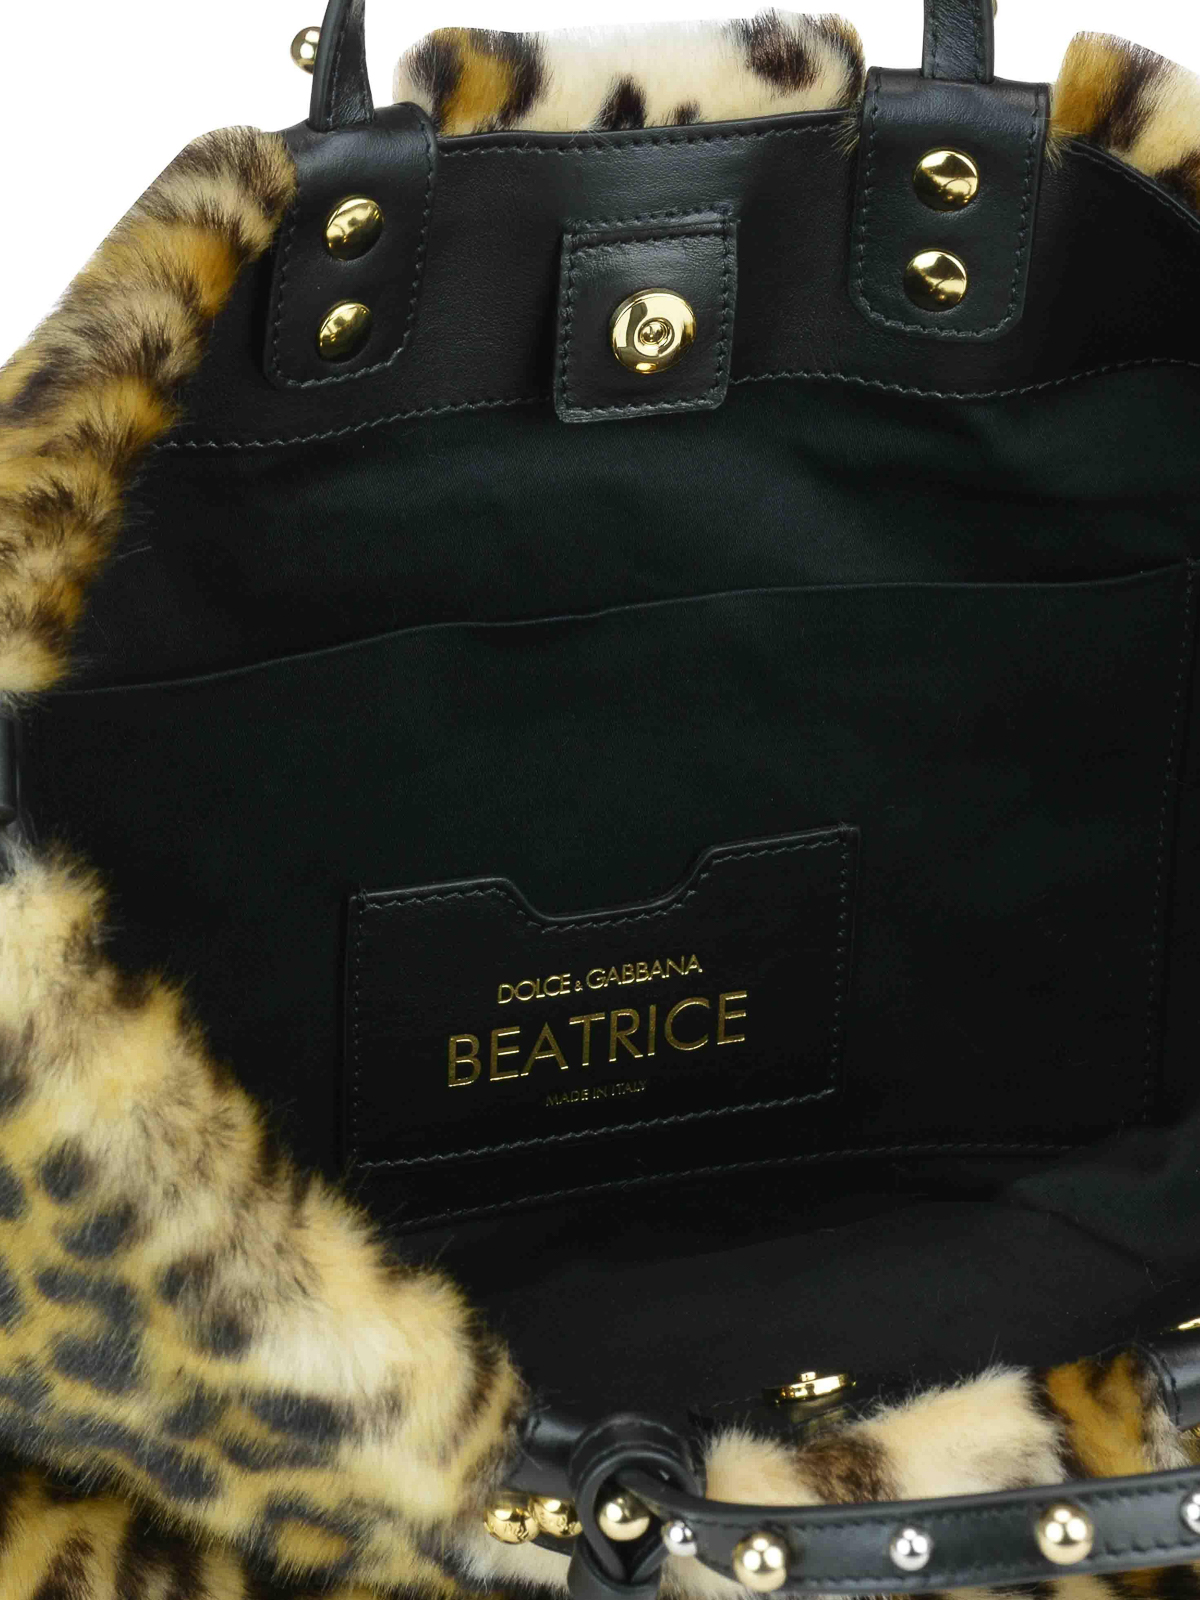 Safari Print Bags: Dolce and Gabbana Leopard Print Purses Make For